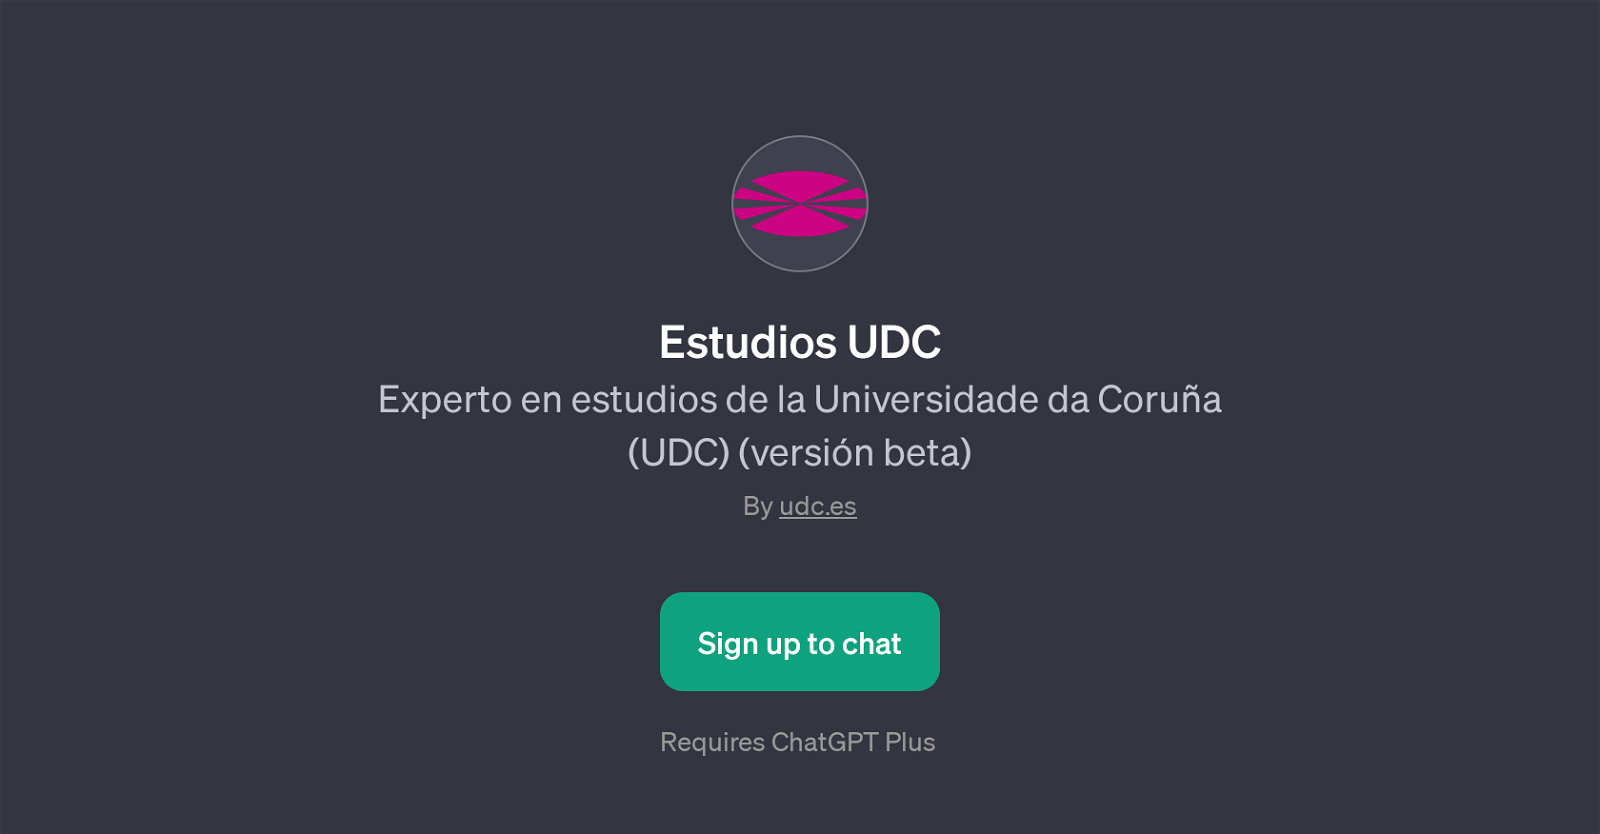 Estudios UDC website